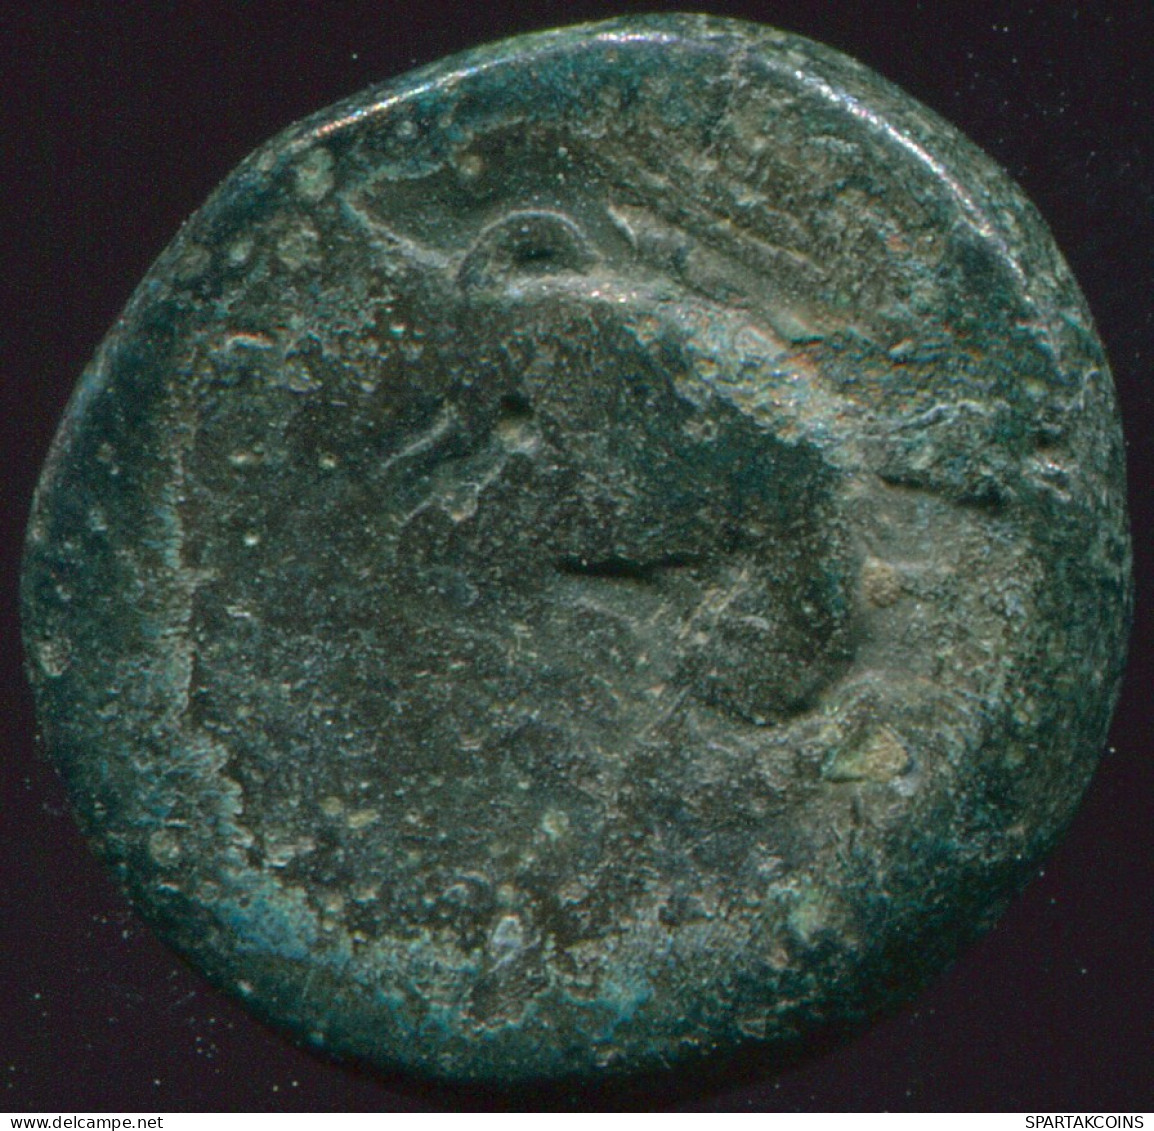 HELMET Antike Authentische Original GRIECHISCHE Münze 2.64g/13.17mm #GRK1324.7.D.A - Grecques